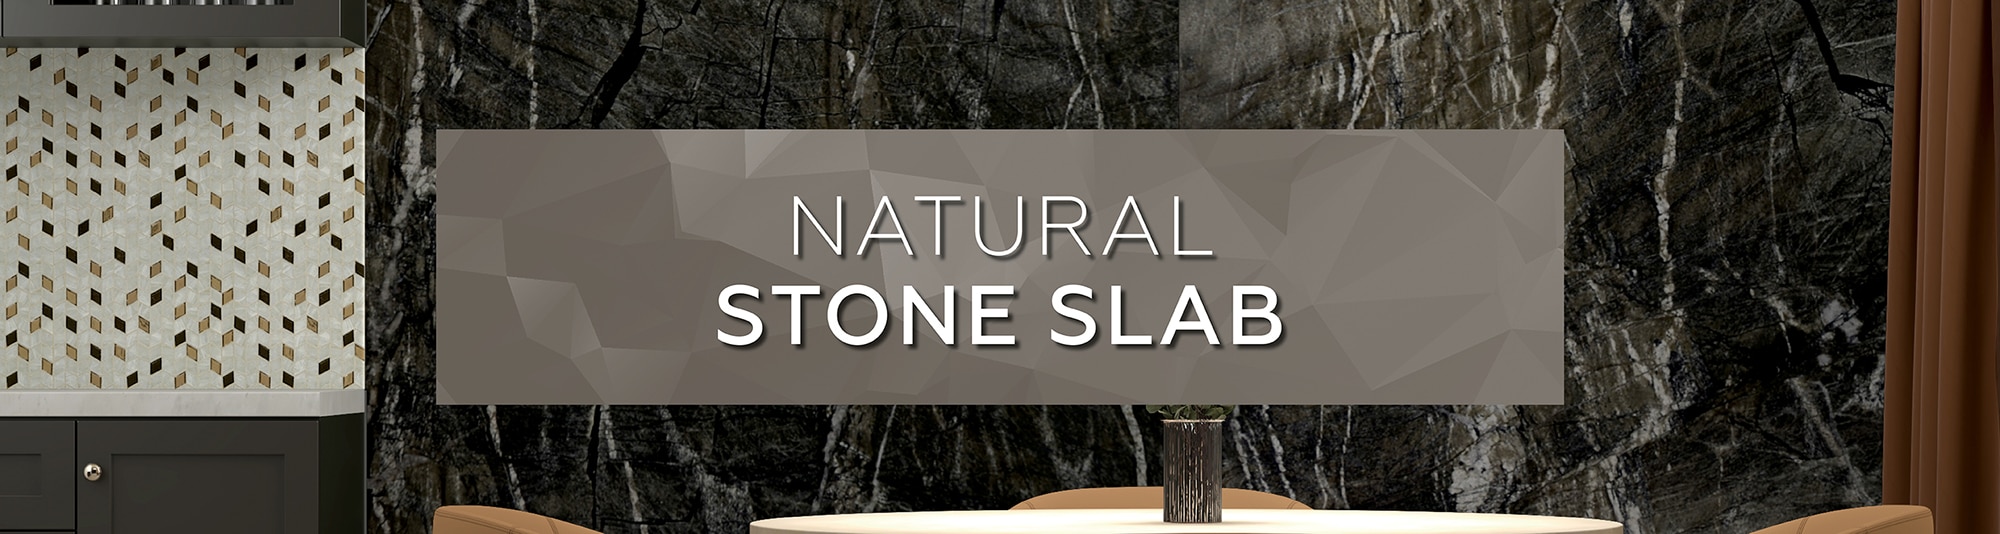 Natural Stone Slab